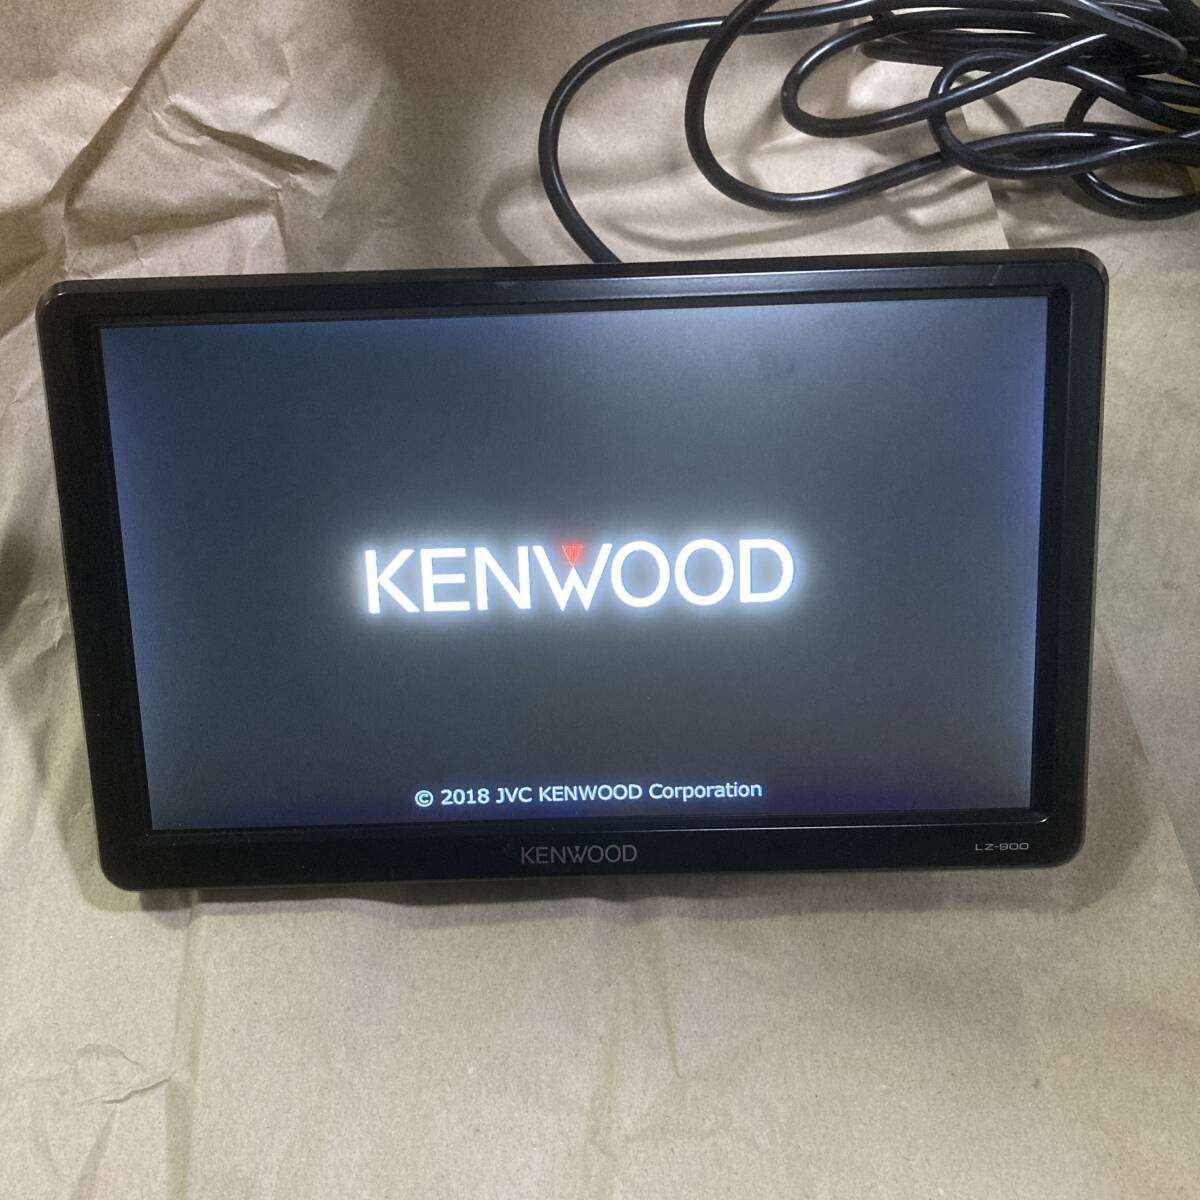 1 Kenwood rear monitor KZ900